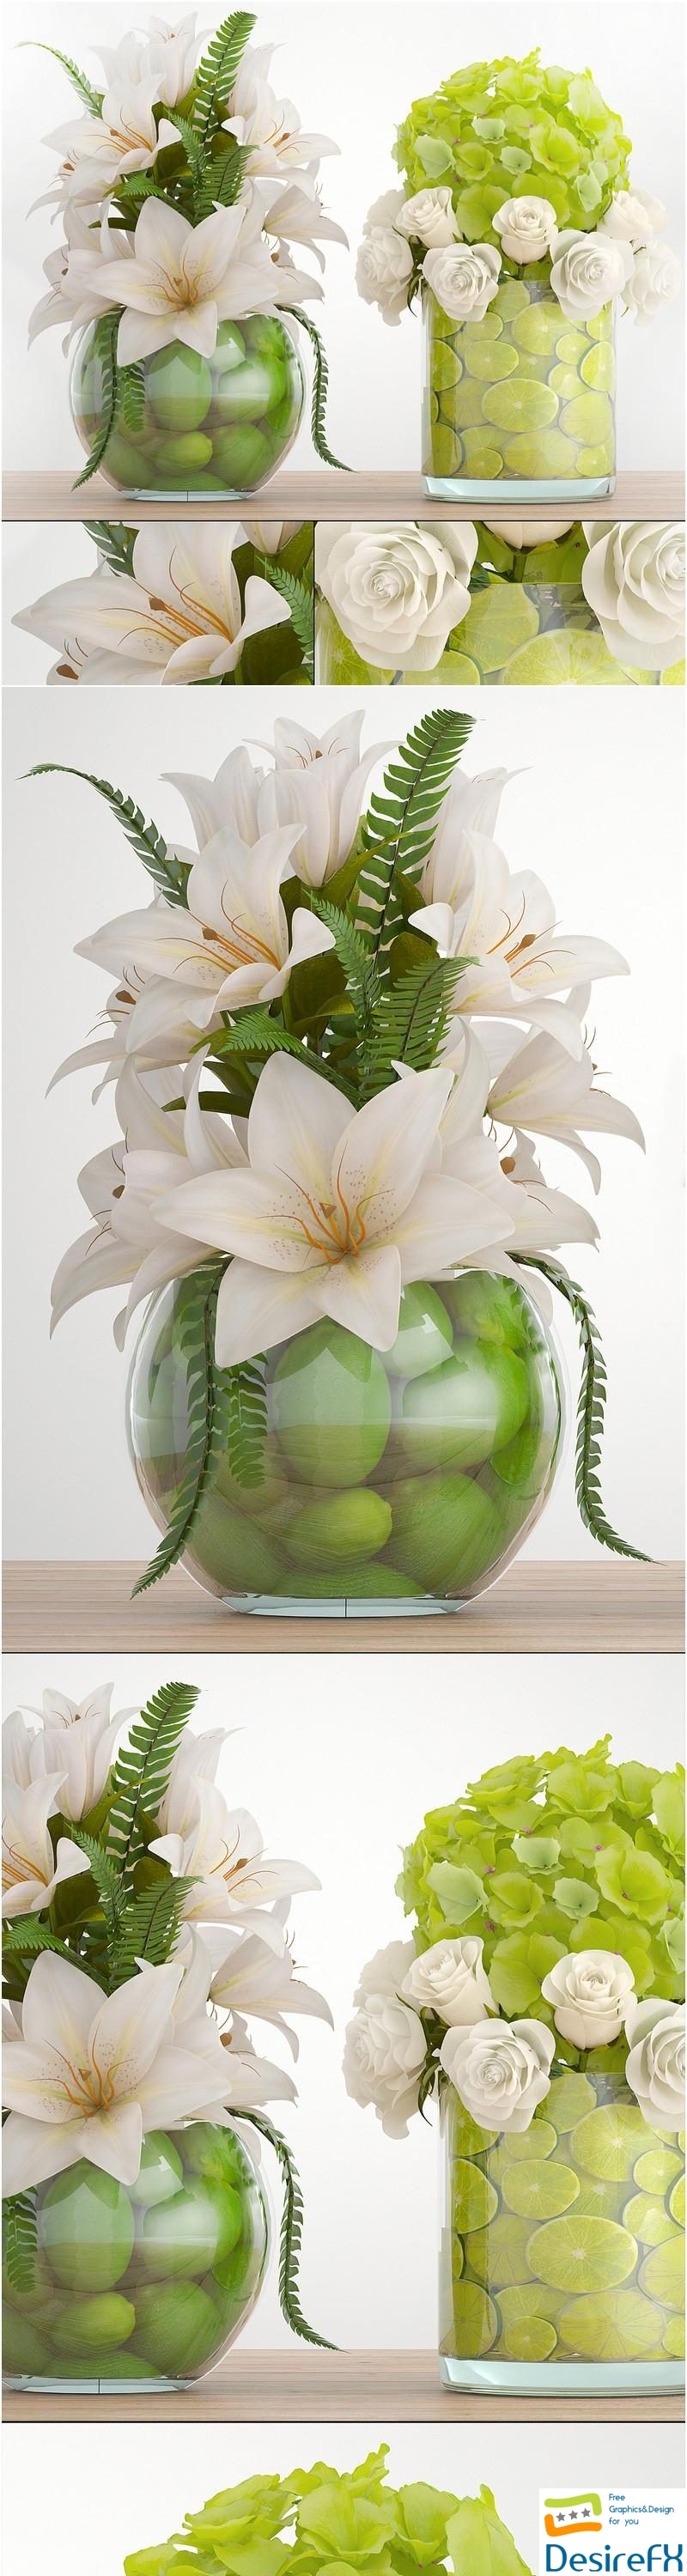 Bouquet of flowers 66. White flowers, lilies, hydrangea, vase with lemon 3D Model